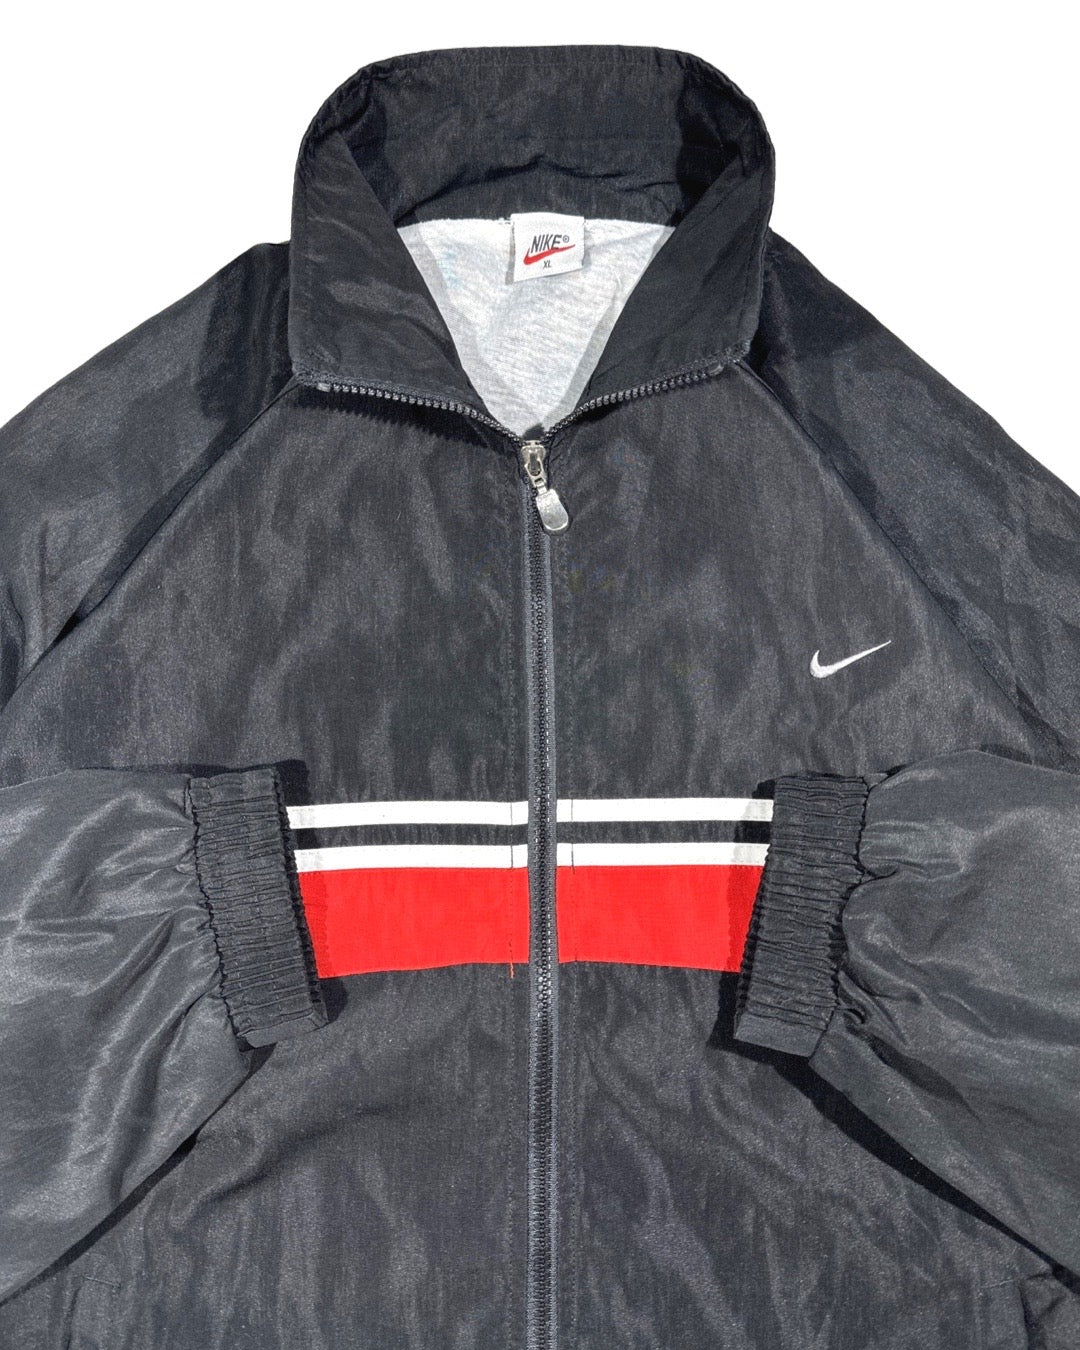 Vintage Nike Jacket - XL